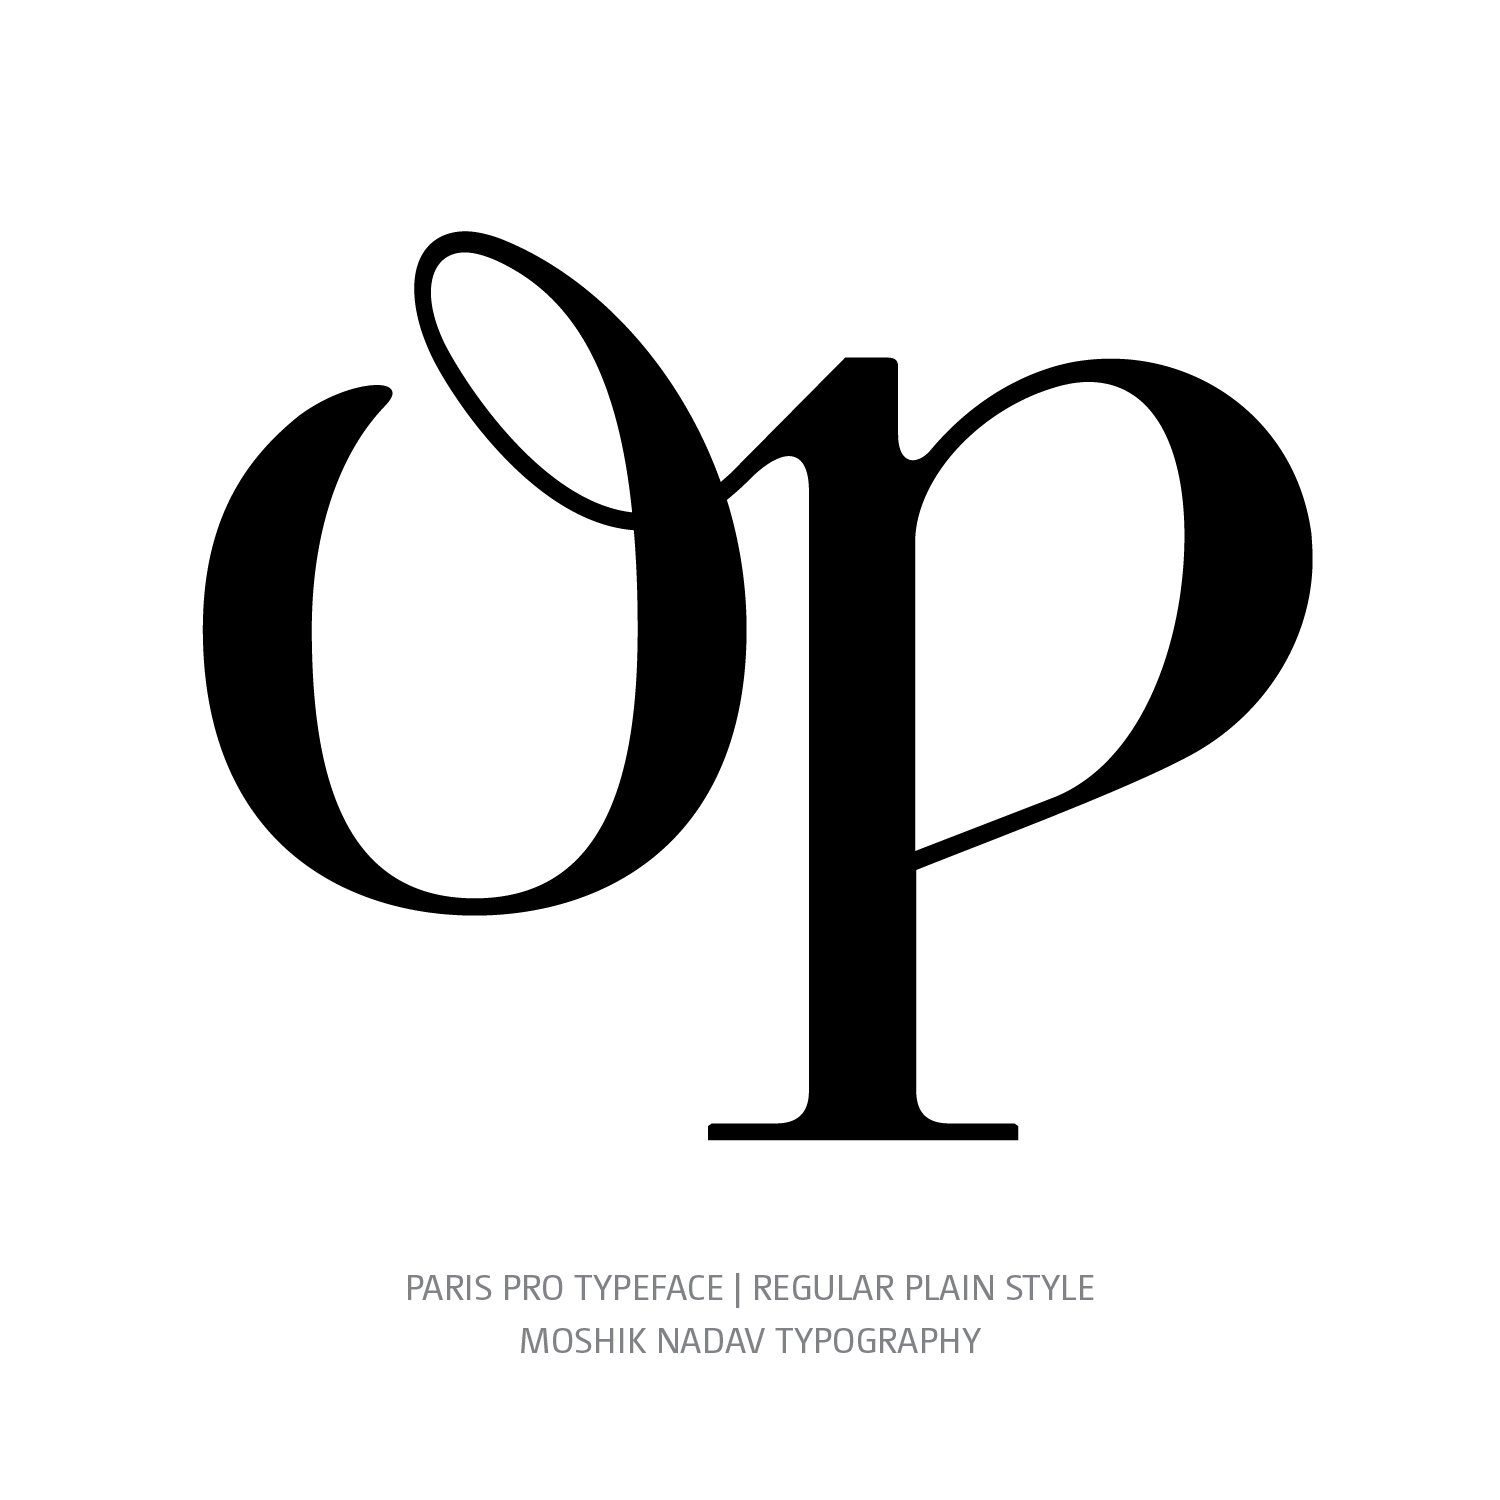 Paris Pro Typeface Regular OP ligature